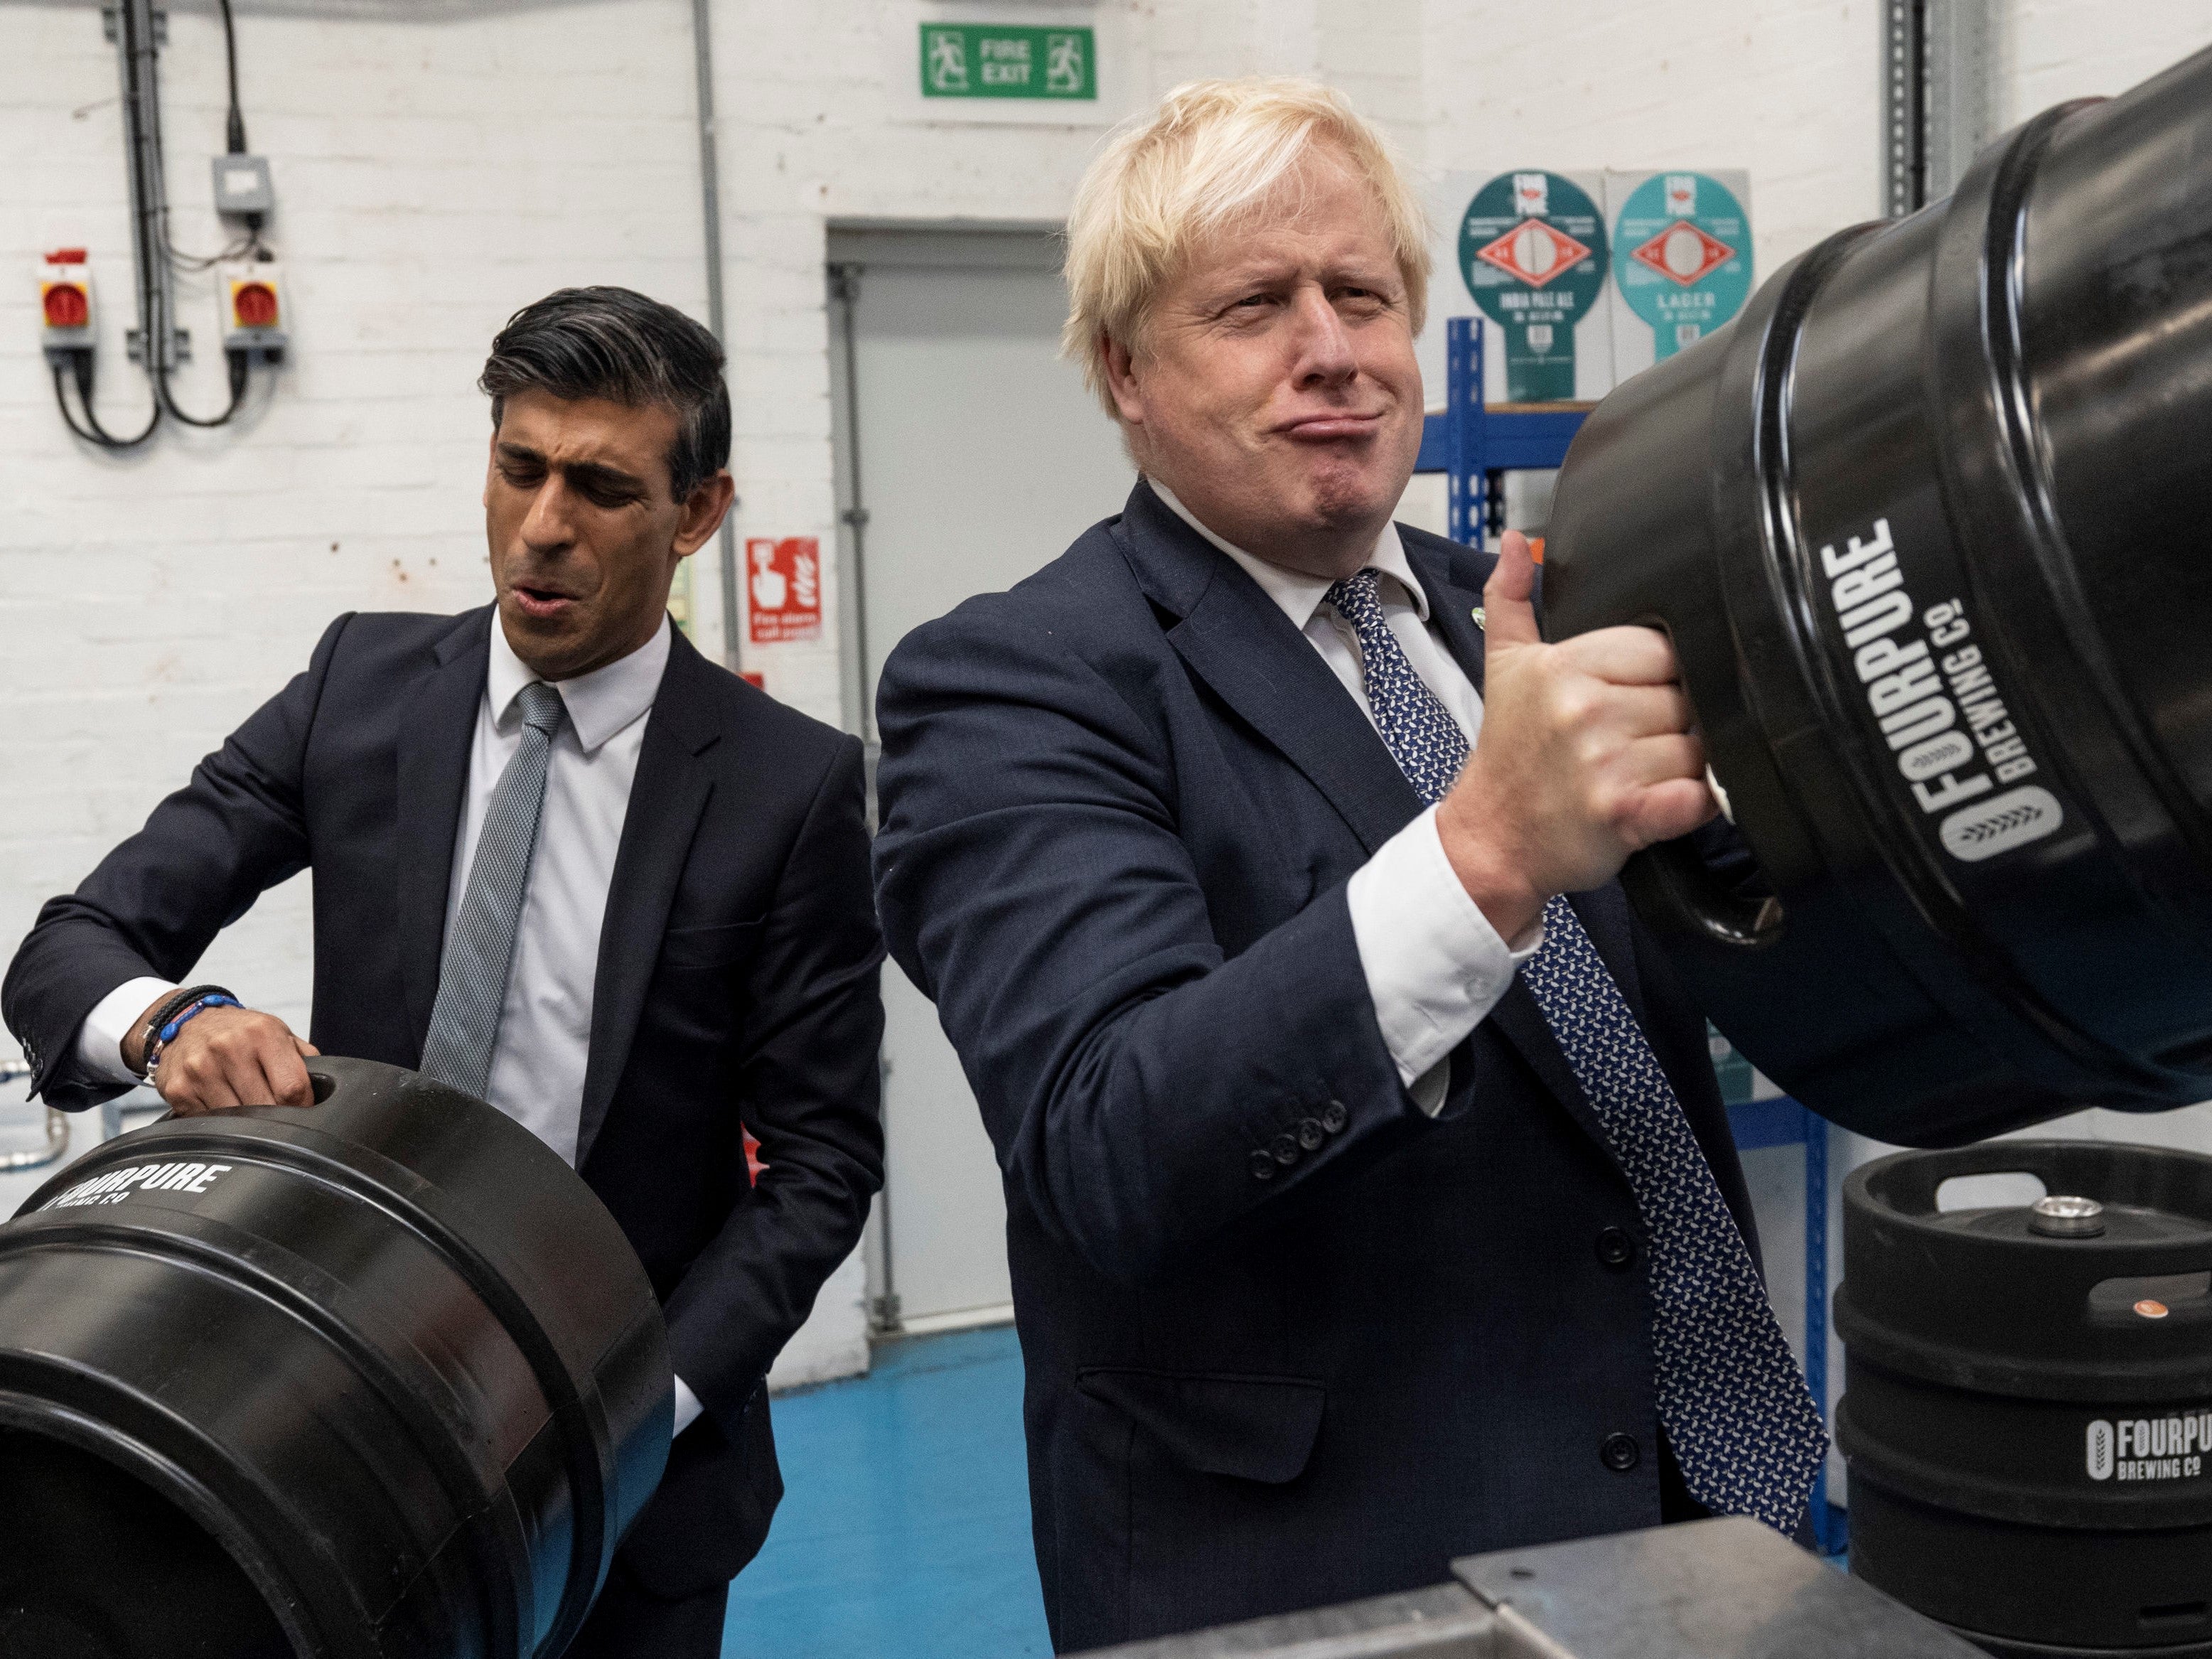 Rishi Sunak and Boris Johnson lifted 30-litre kegs at the photocall